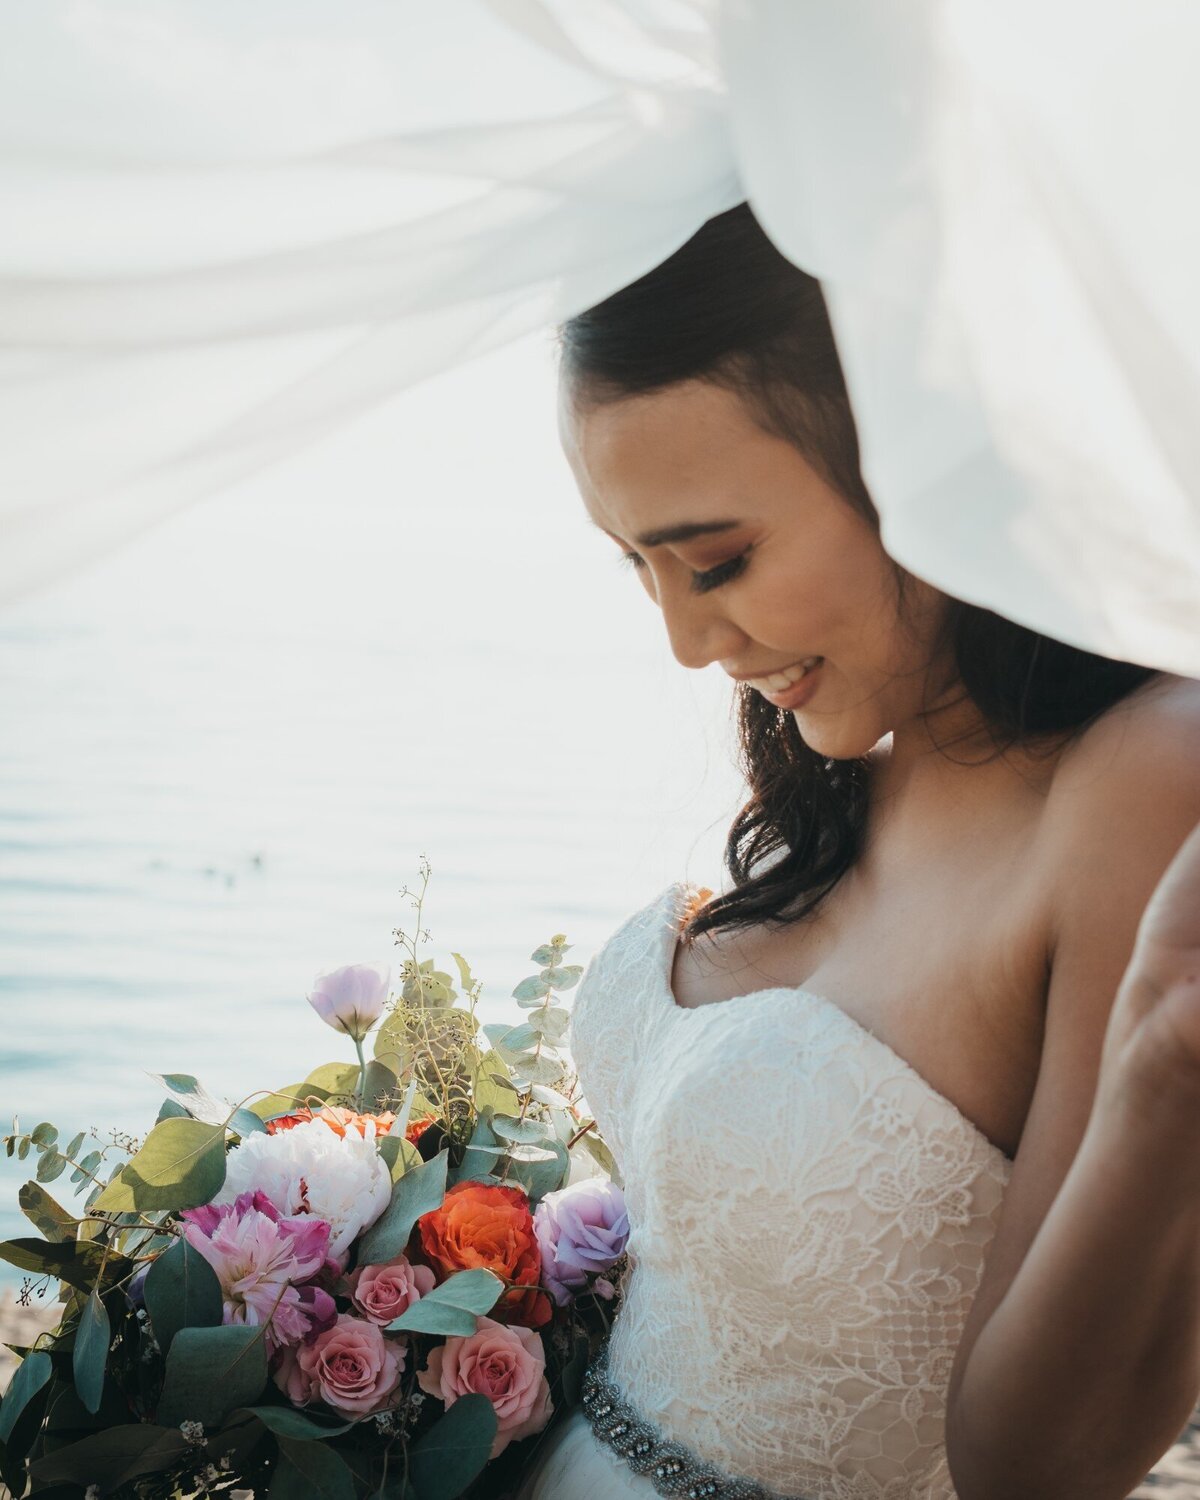 Becca_Gail_ Photography_Michigan_wedding_lake_michigan_Photographer (23)